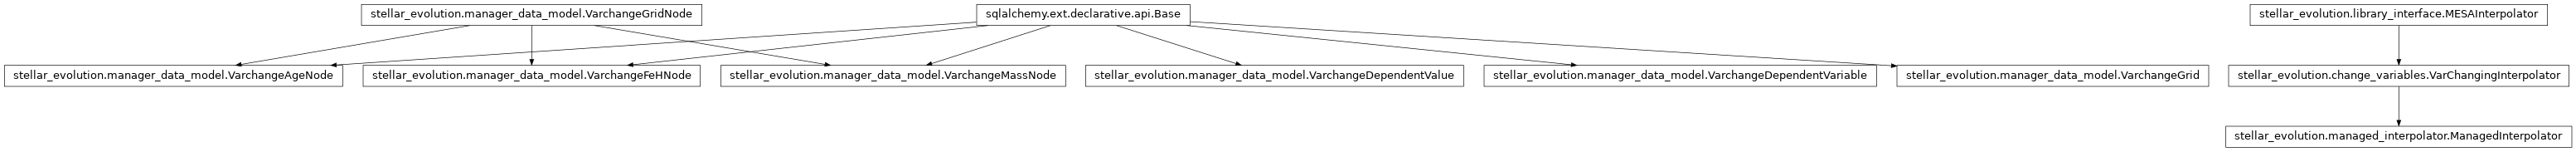 Inheritance diagram of ManagedInterpolator, VarChangingInterpolator, VarchangeAgeNode, VarchangeDependentValue, VarchangeDependentVariable, VarchangeFeHNode, VarchangeGrid, VarchangeMassNode